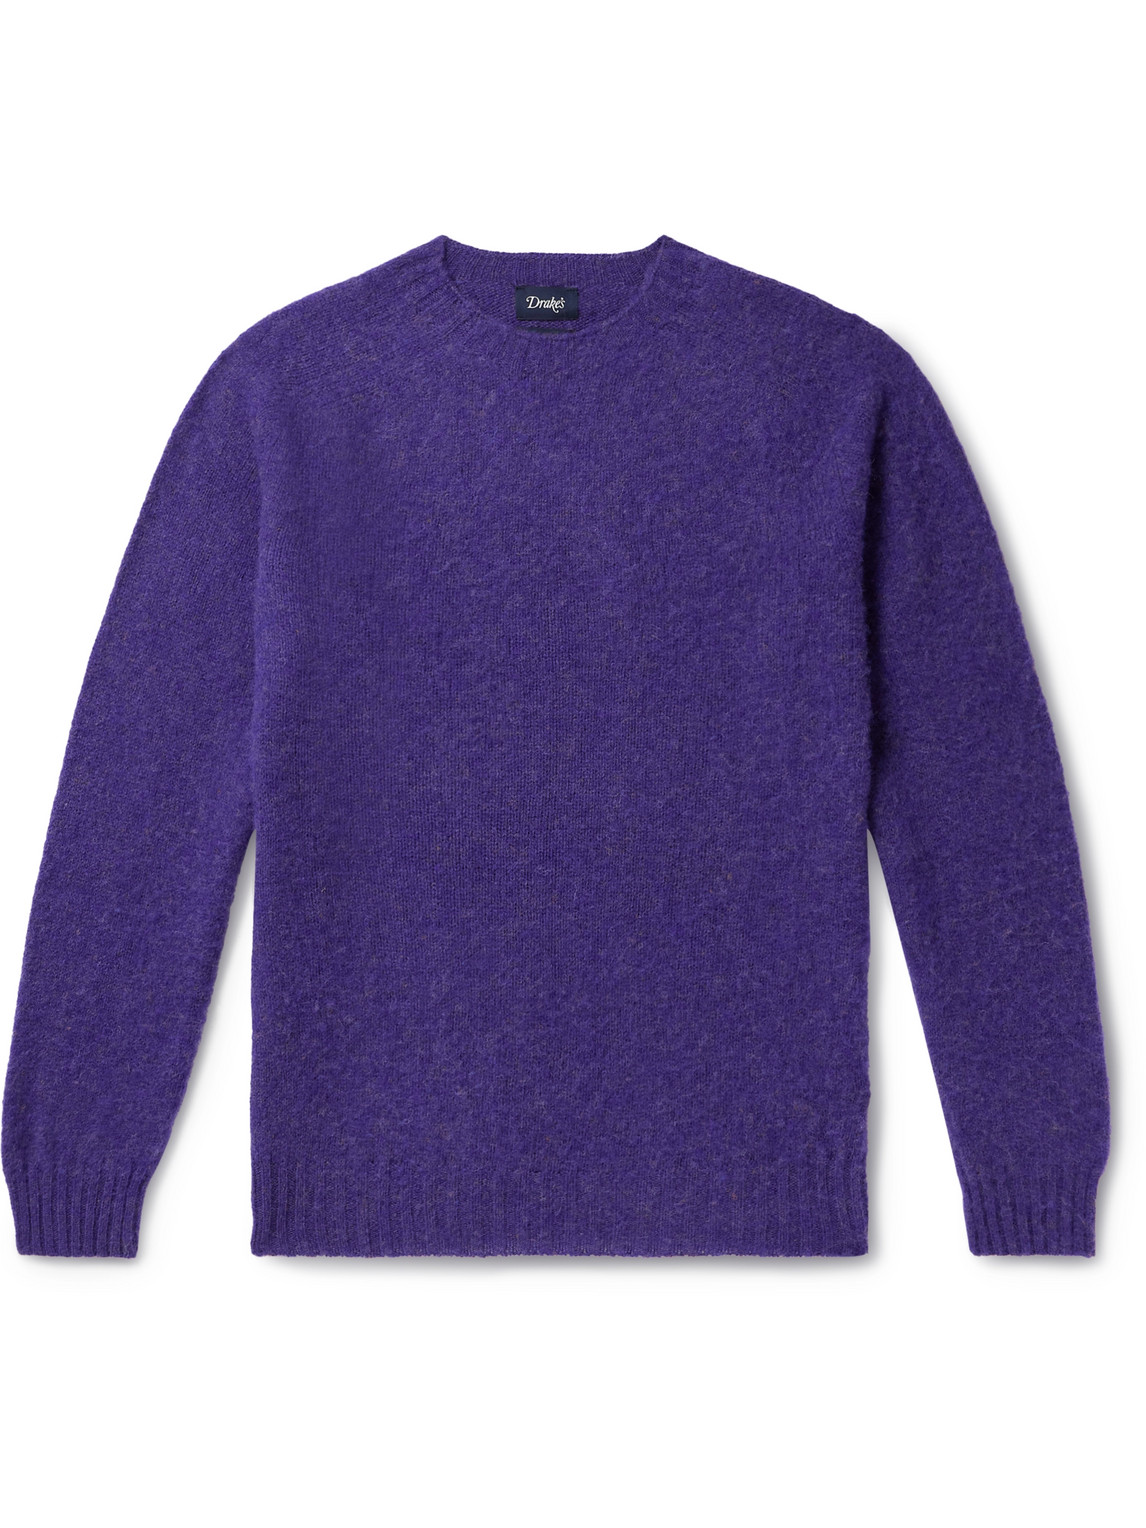 Drake's Brushed Virgin Shetland Wool Sweater In Purple